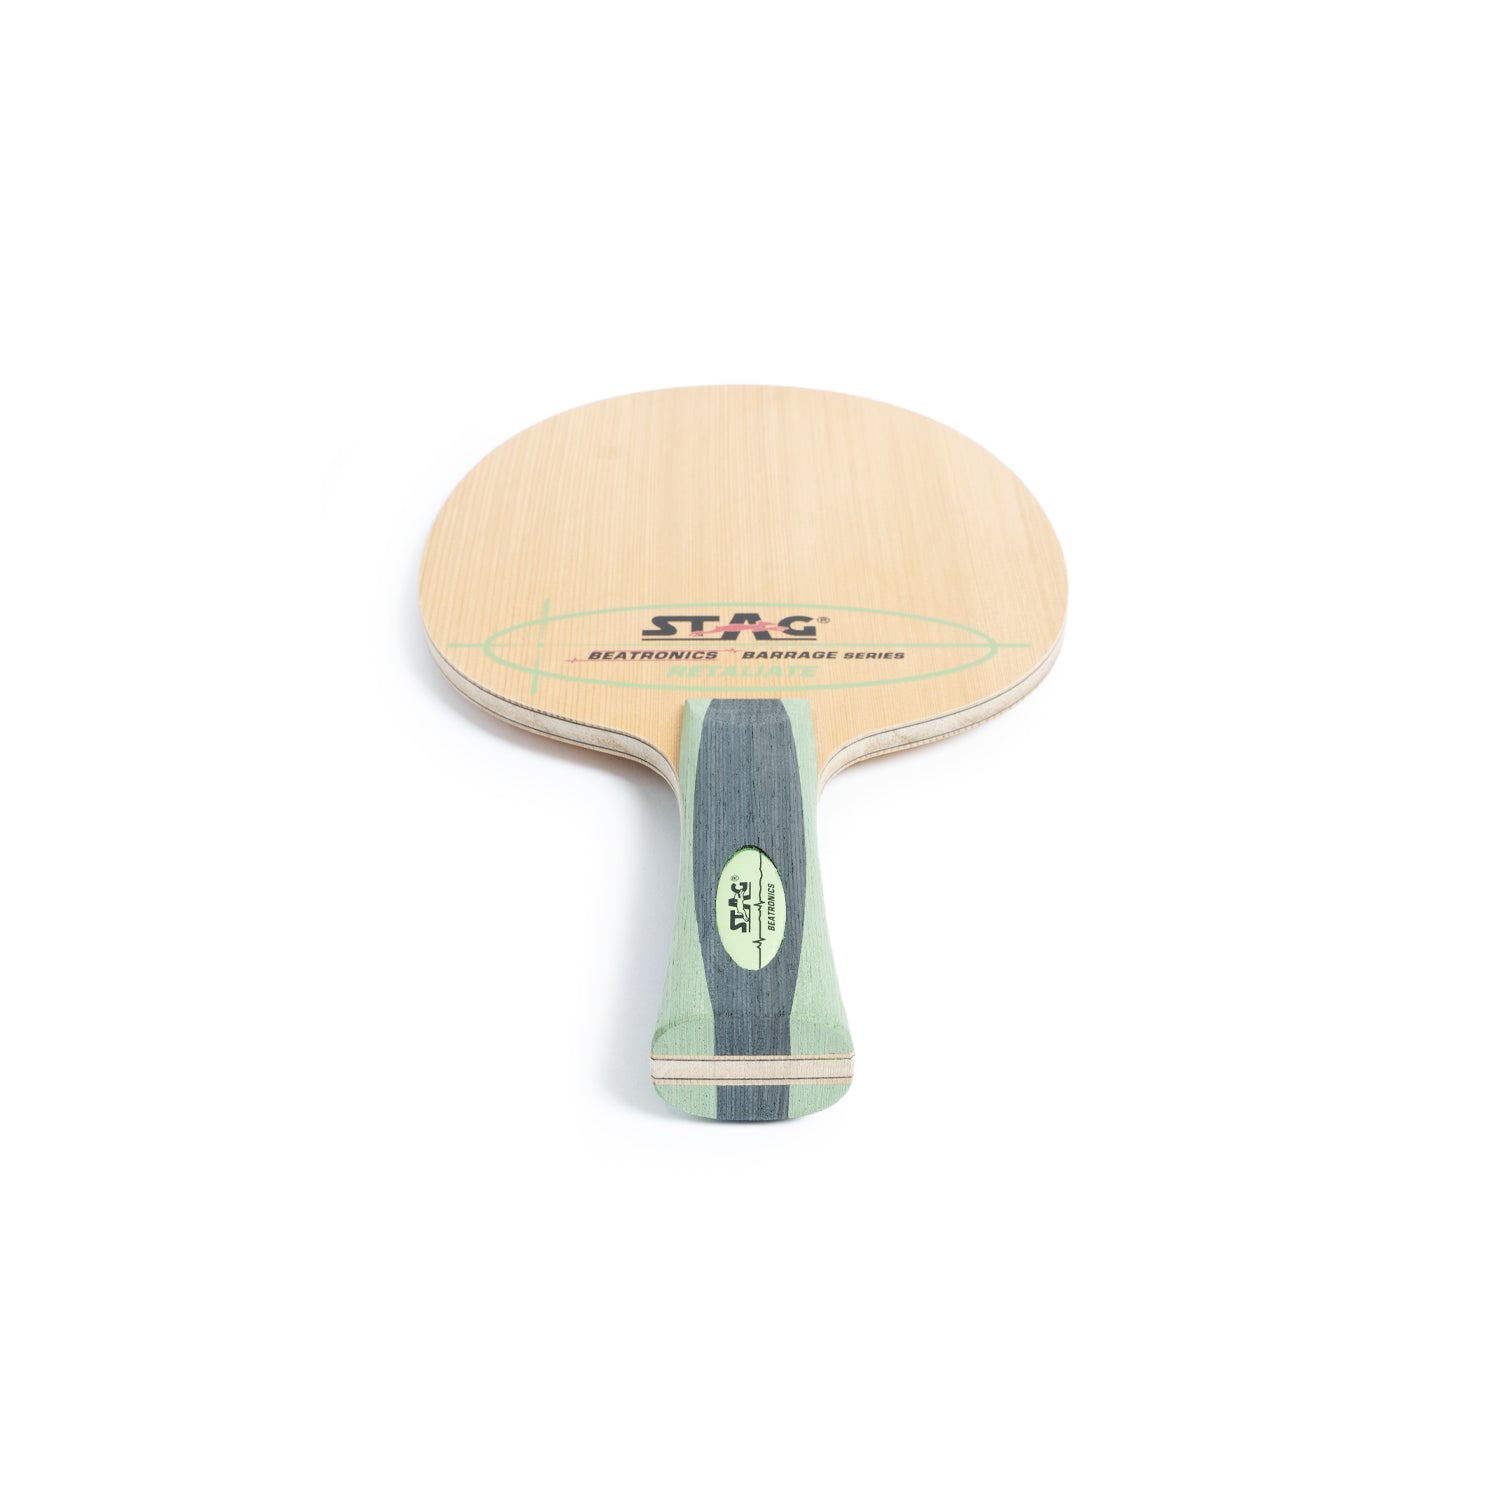 Stag Beatronics Barrage Series Retaliate Table Tennis Blade